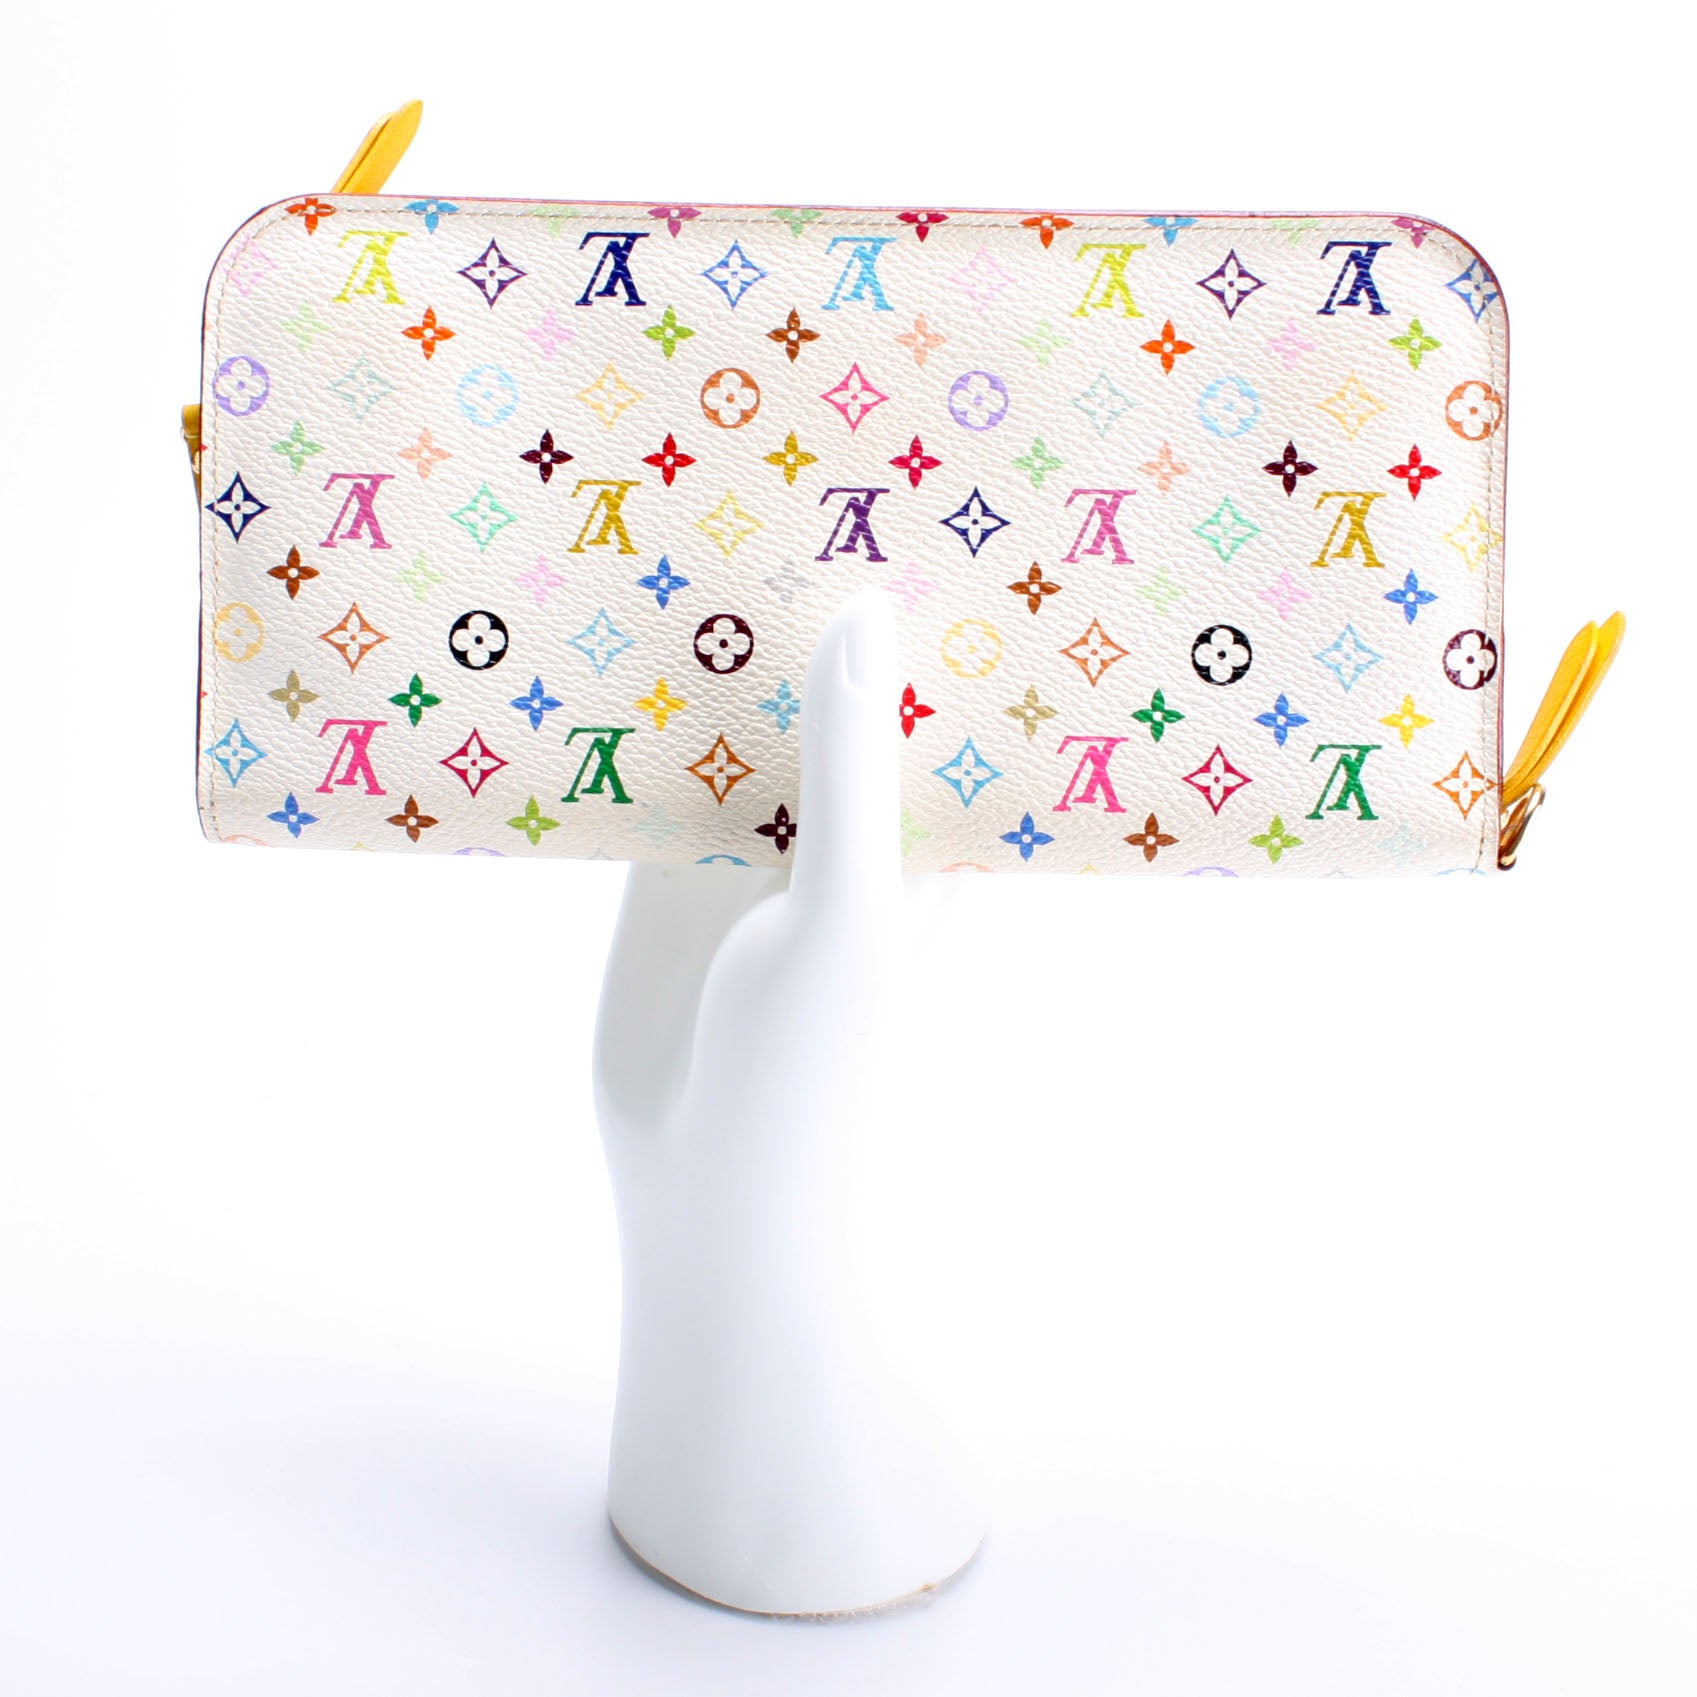 Insolite Wallet T&B Monogram – Keeks Designer Handbags